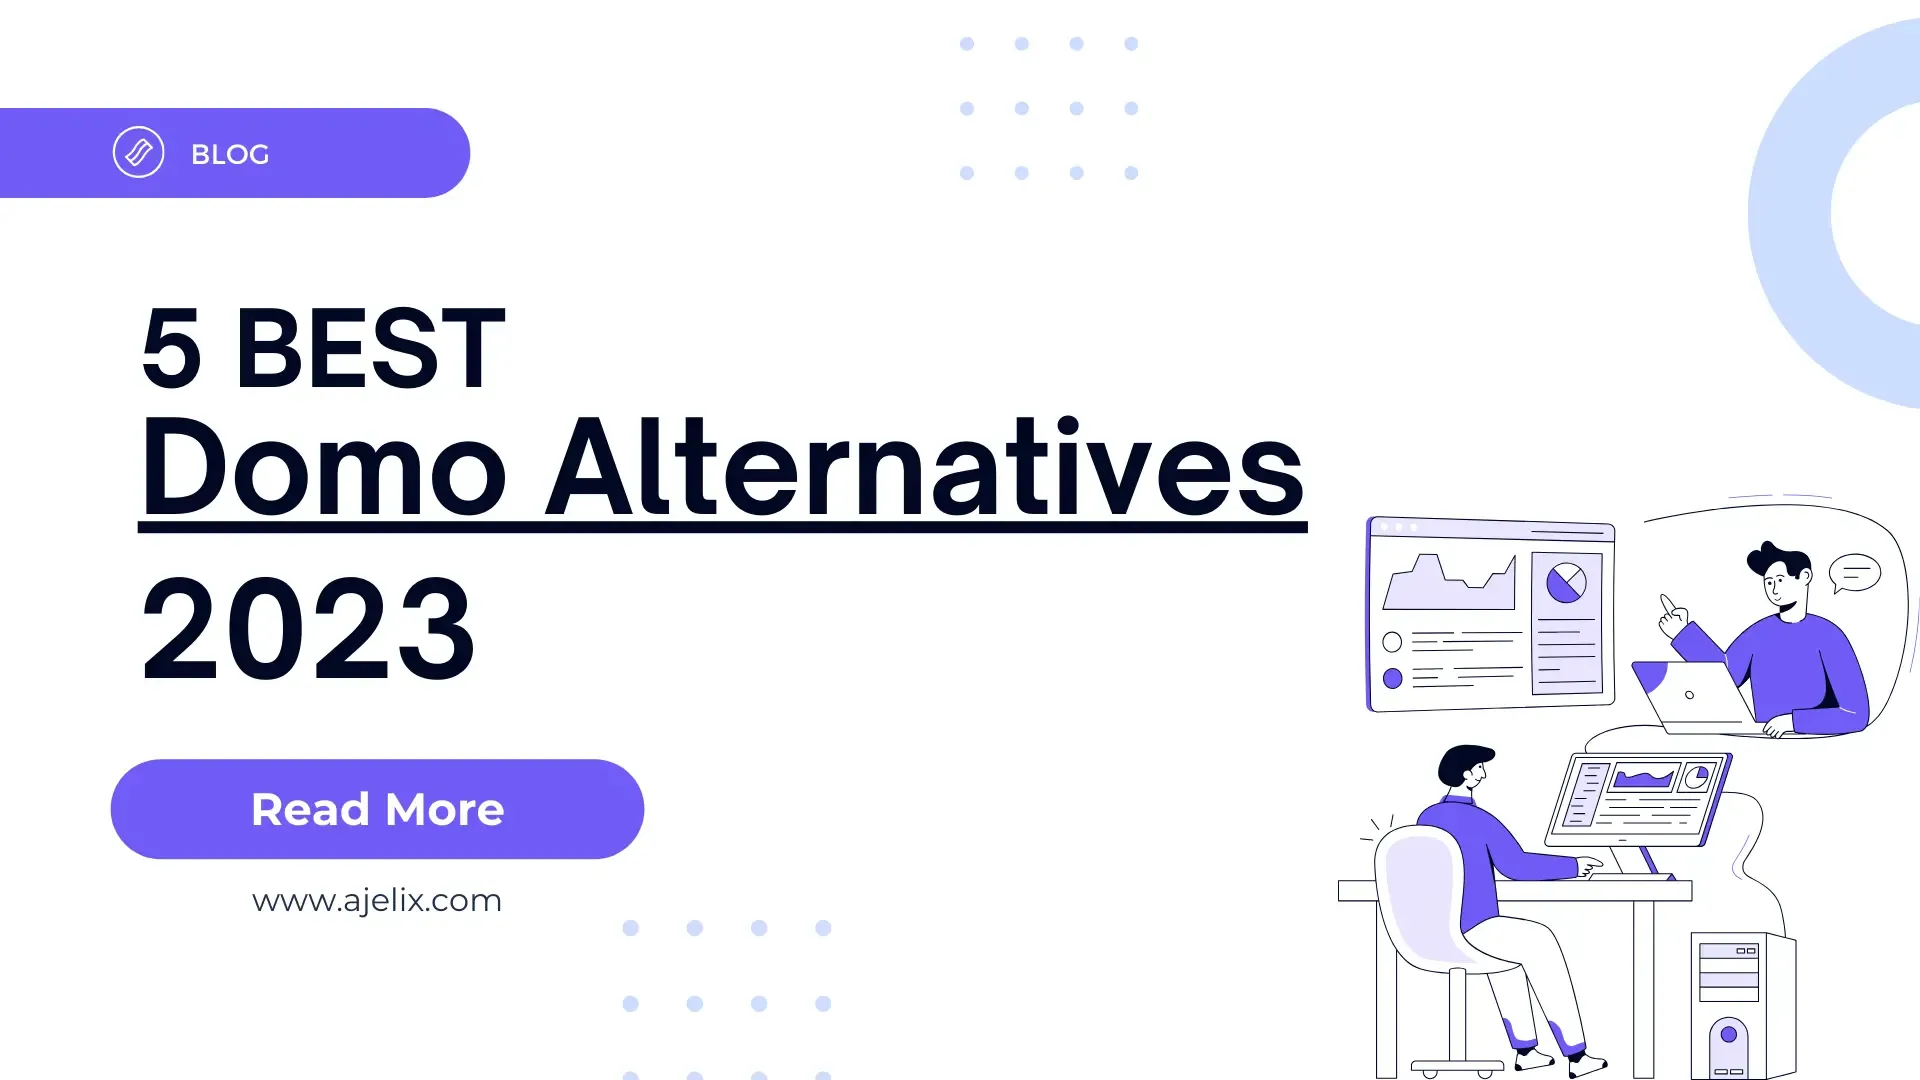 5 Best domo alternatives banner